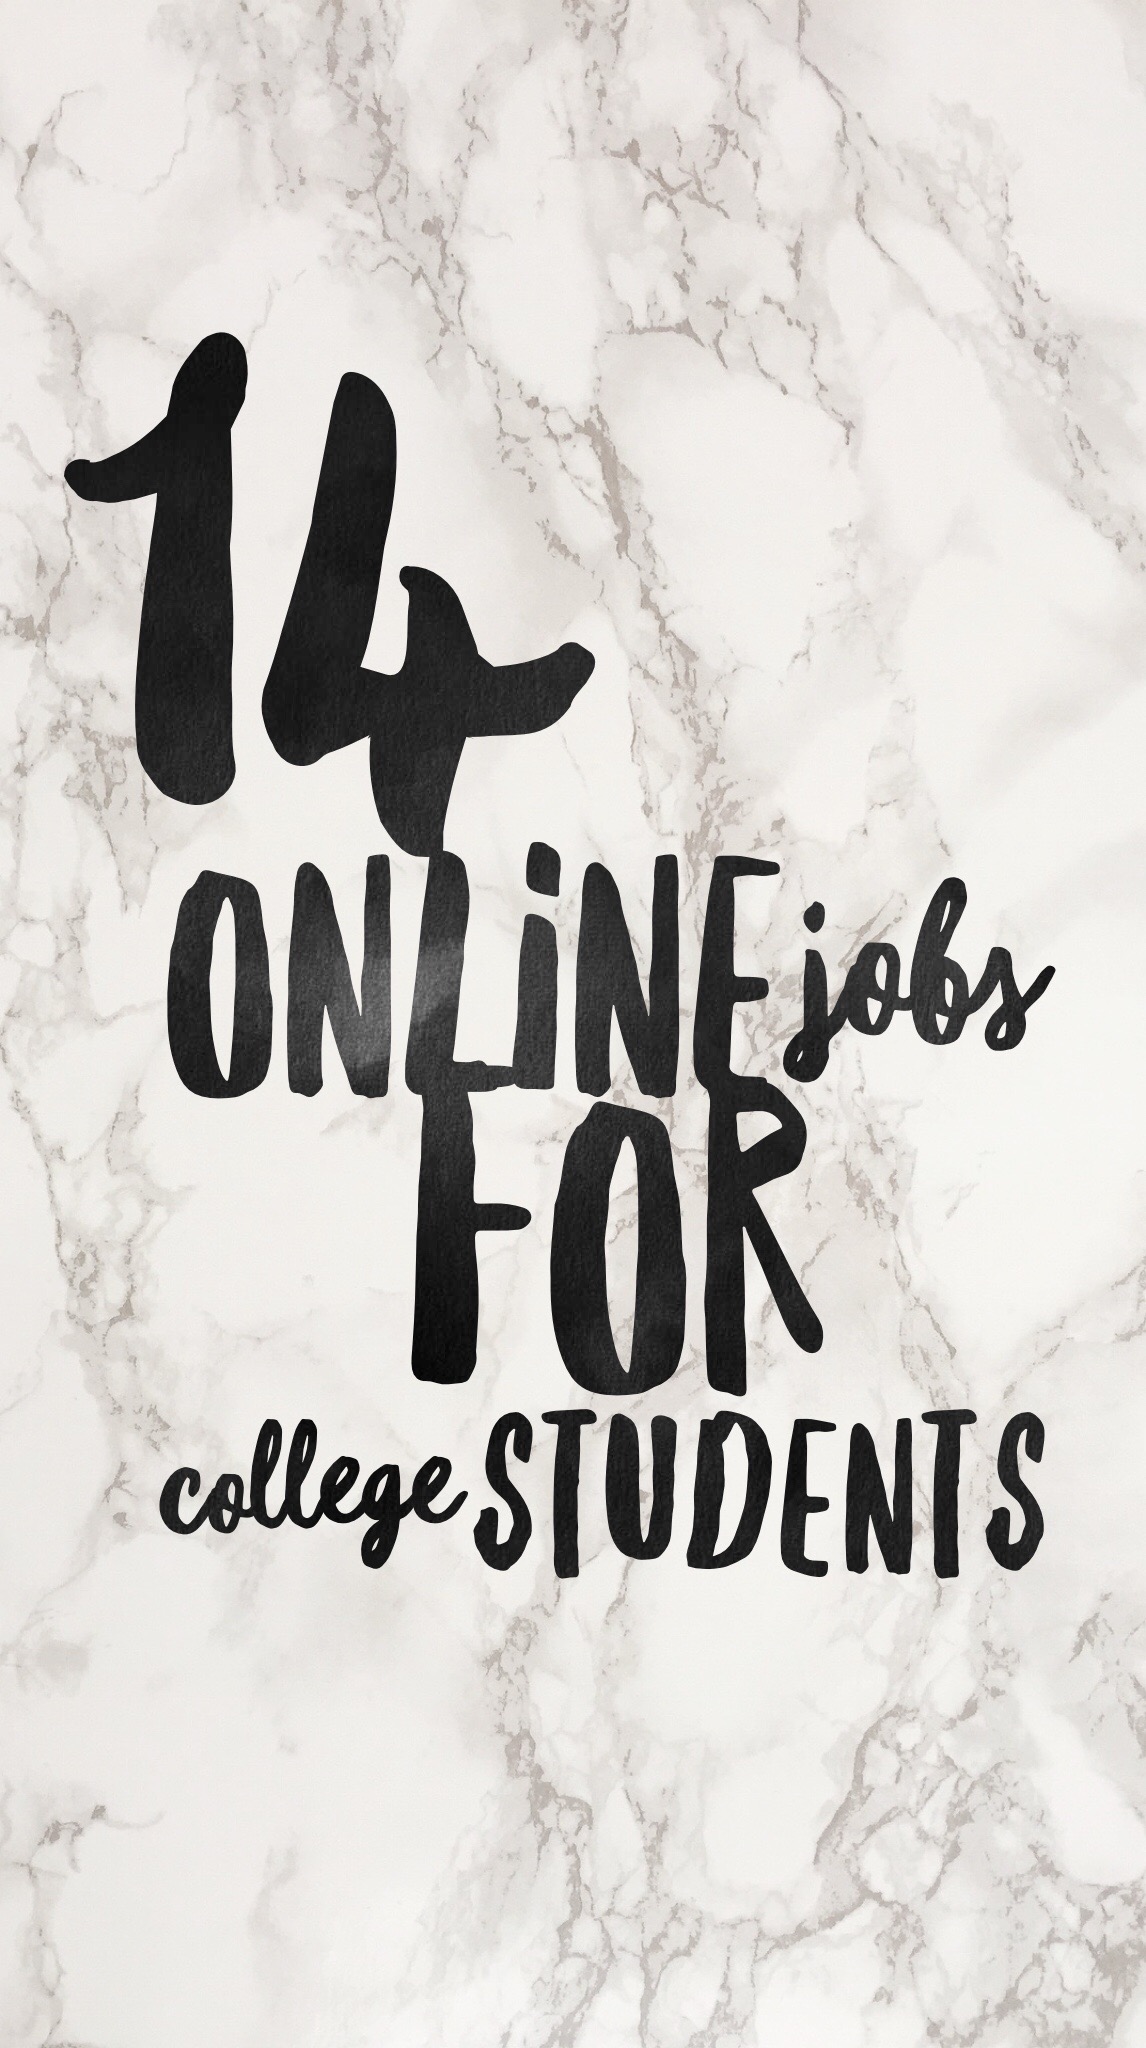 14 Online Jobs - Pinterest